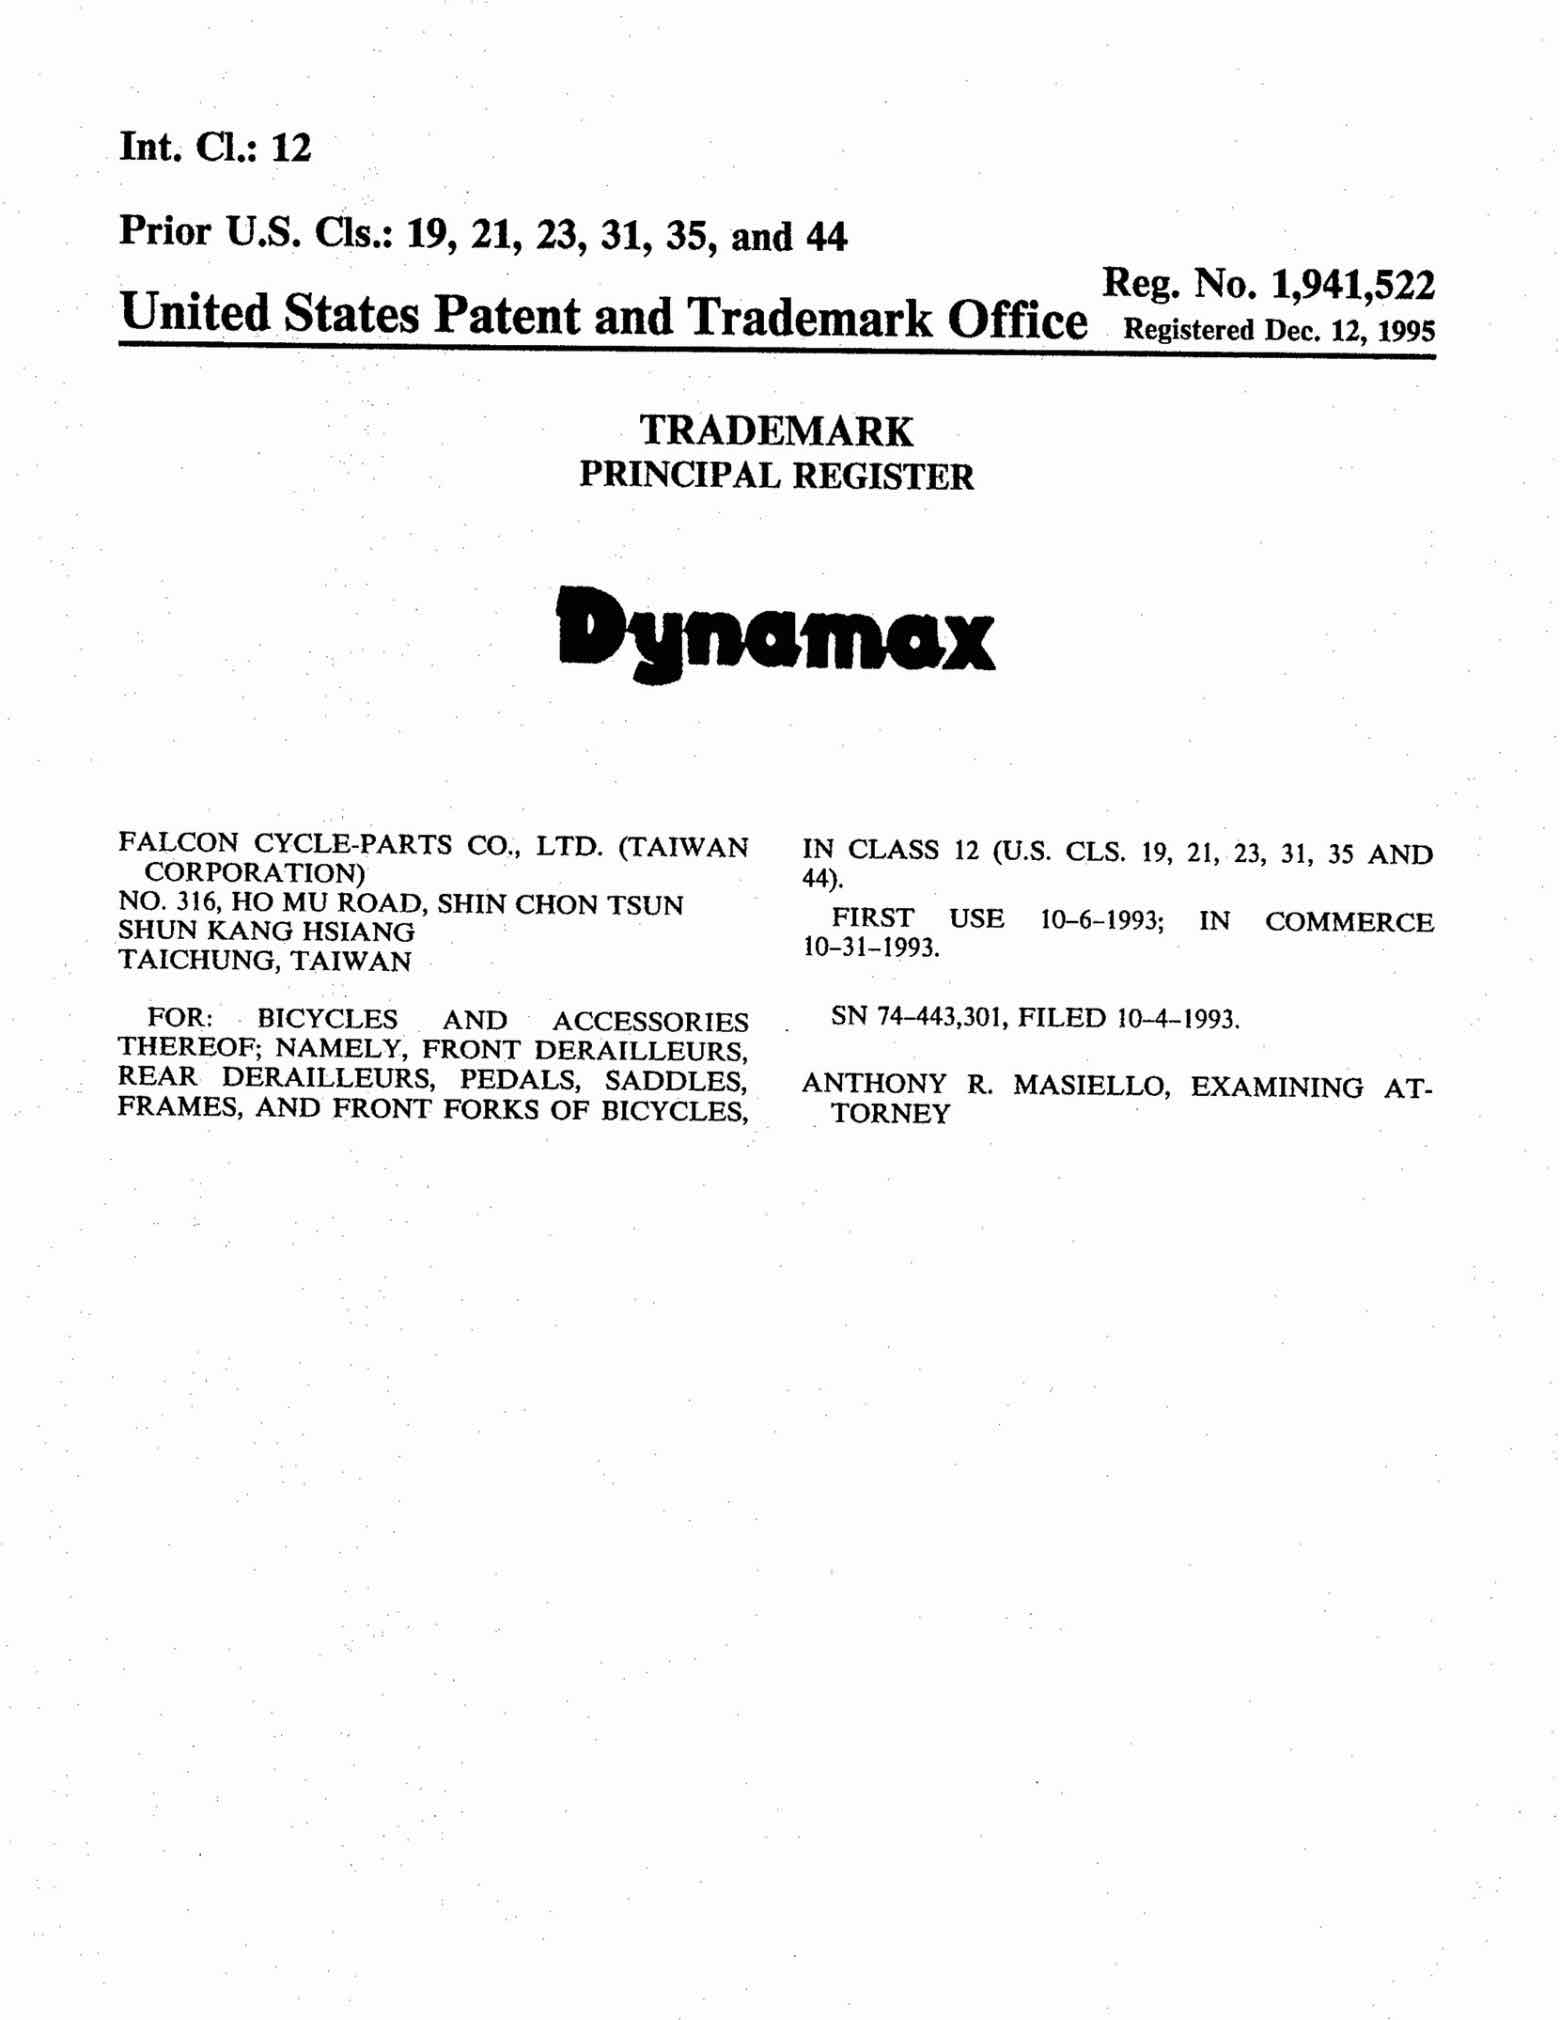 US Trademark 1,941,522 - Falcon Dynamax main image